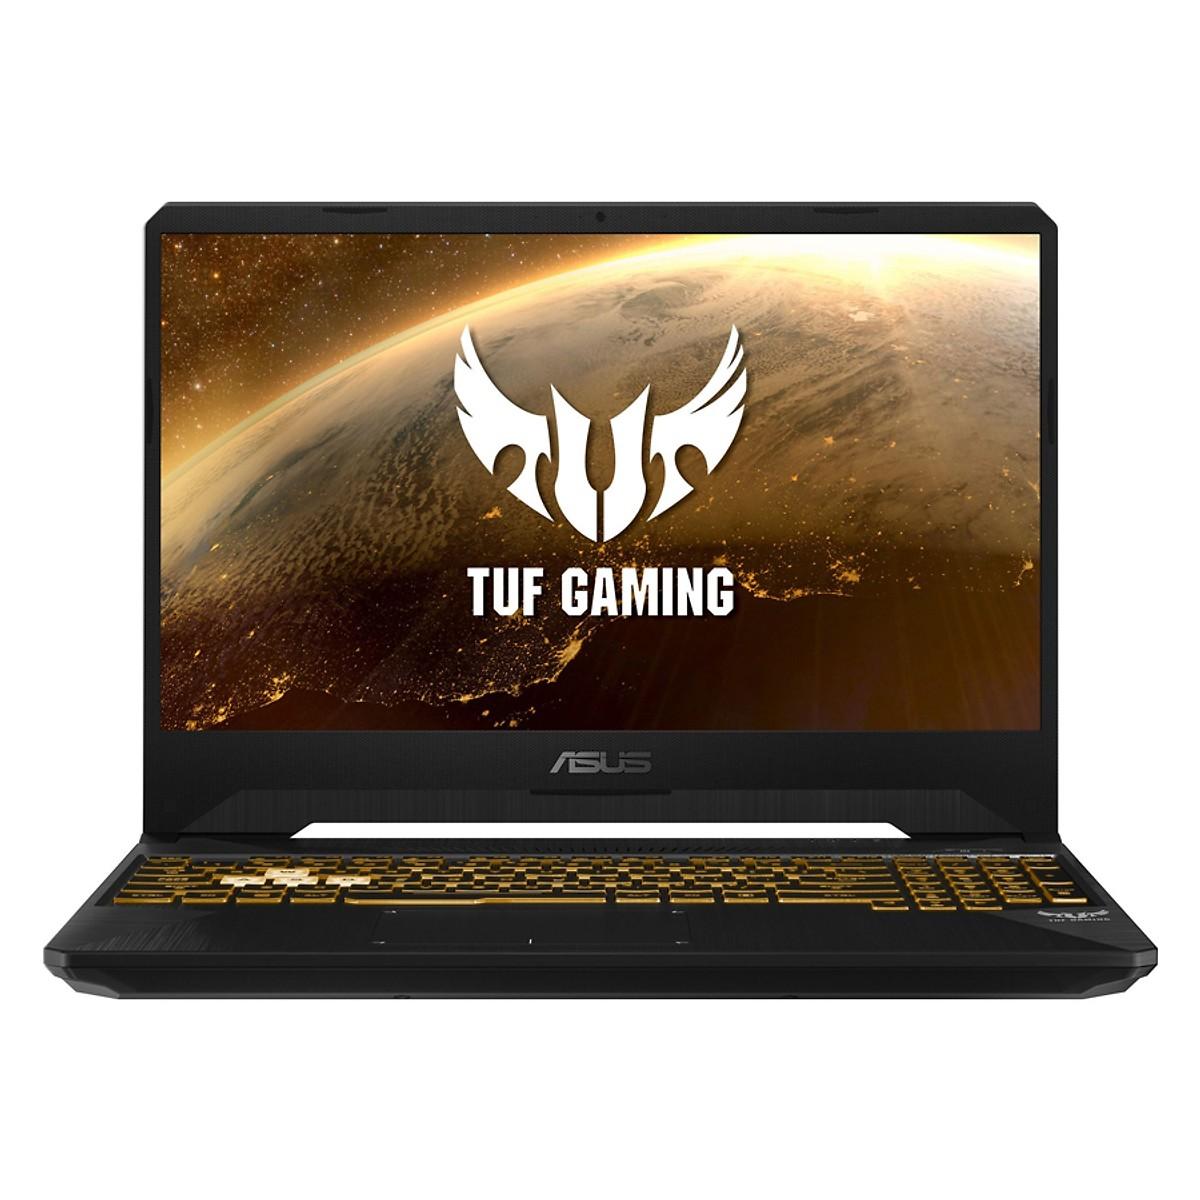 Laptop Asus TUF Gaming FX505GD-BQ014T Core i7-8750H/ Win10 (15.6 FHD IPS)